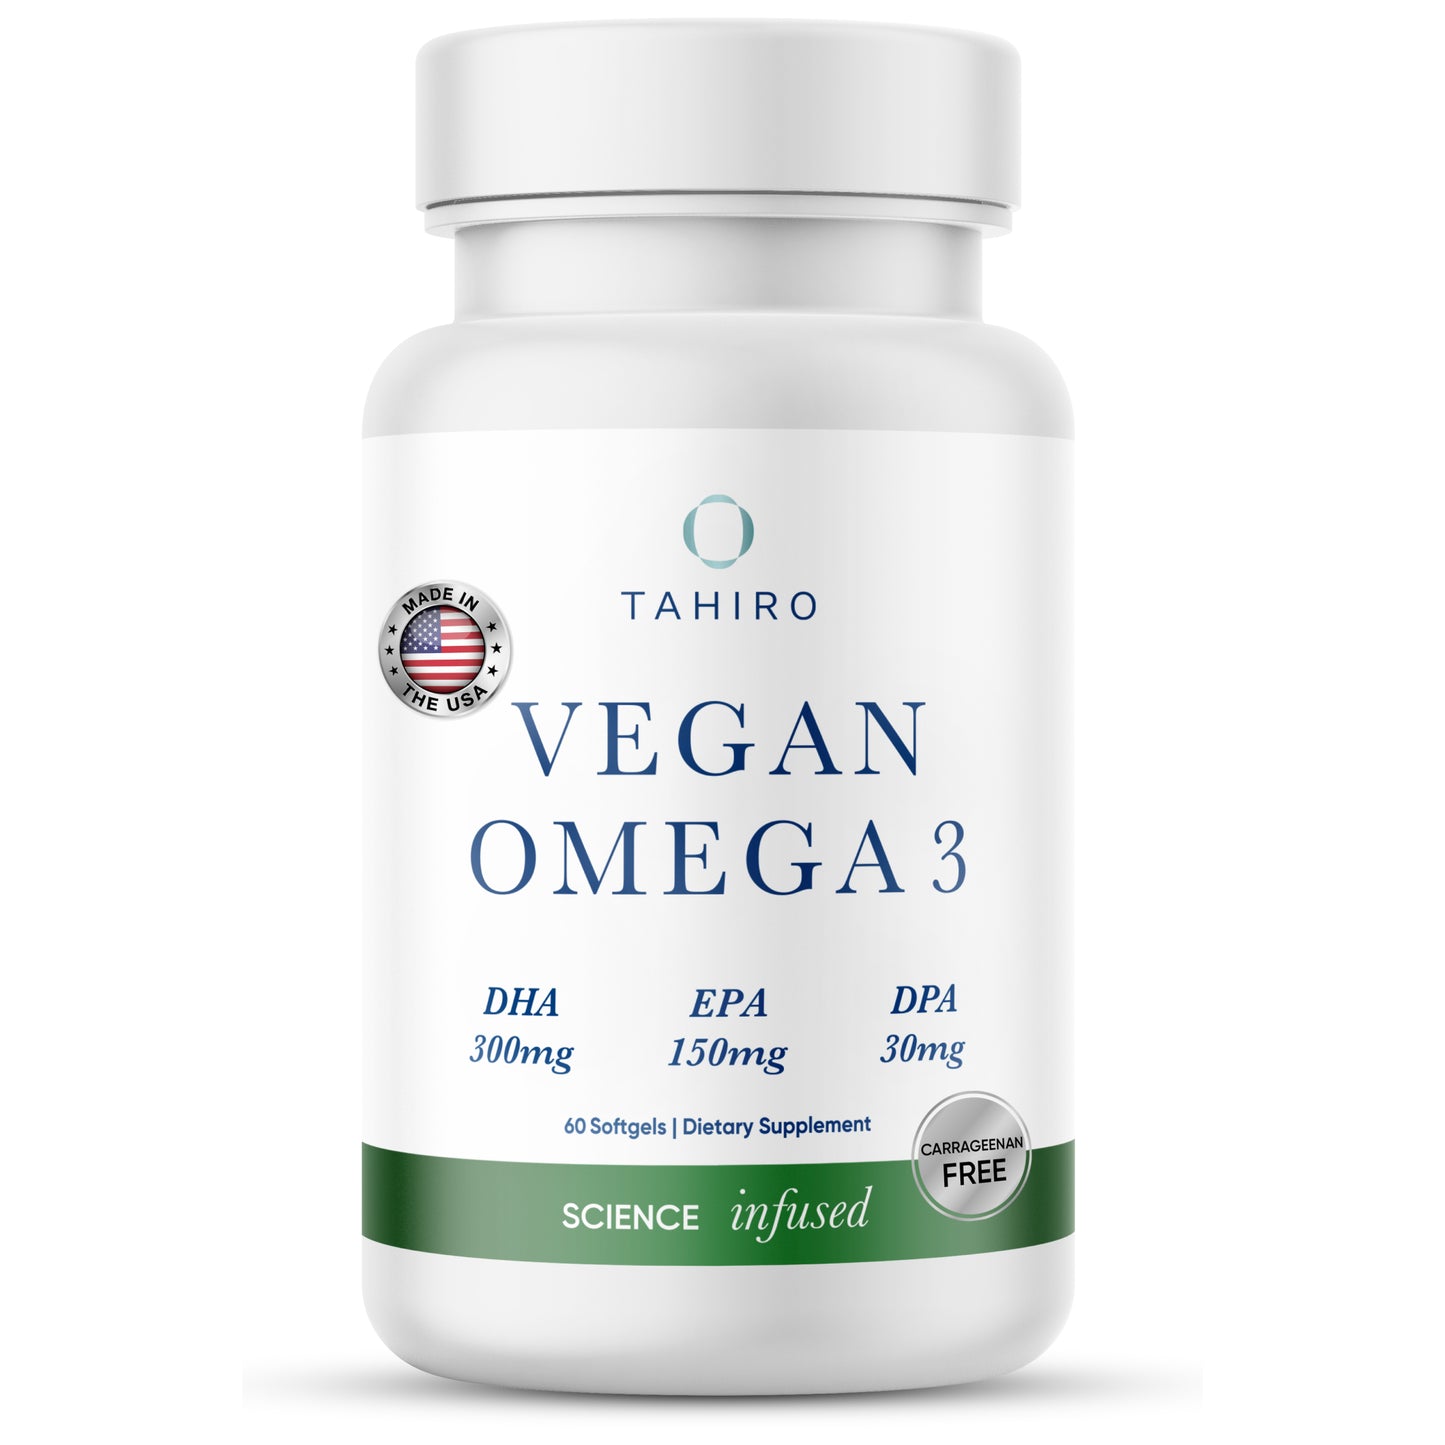 Algae Omega 3